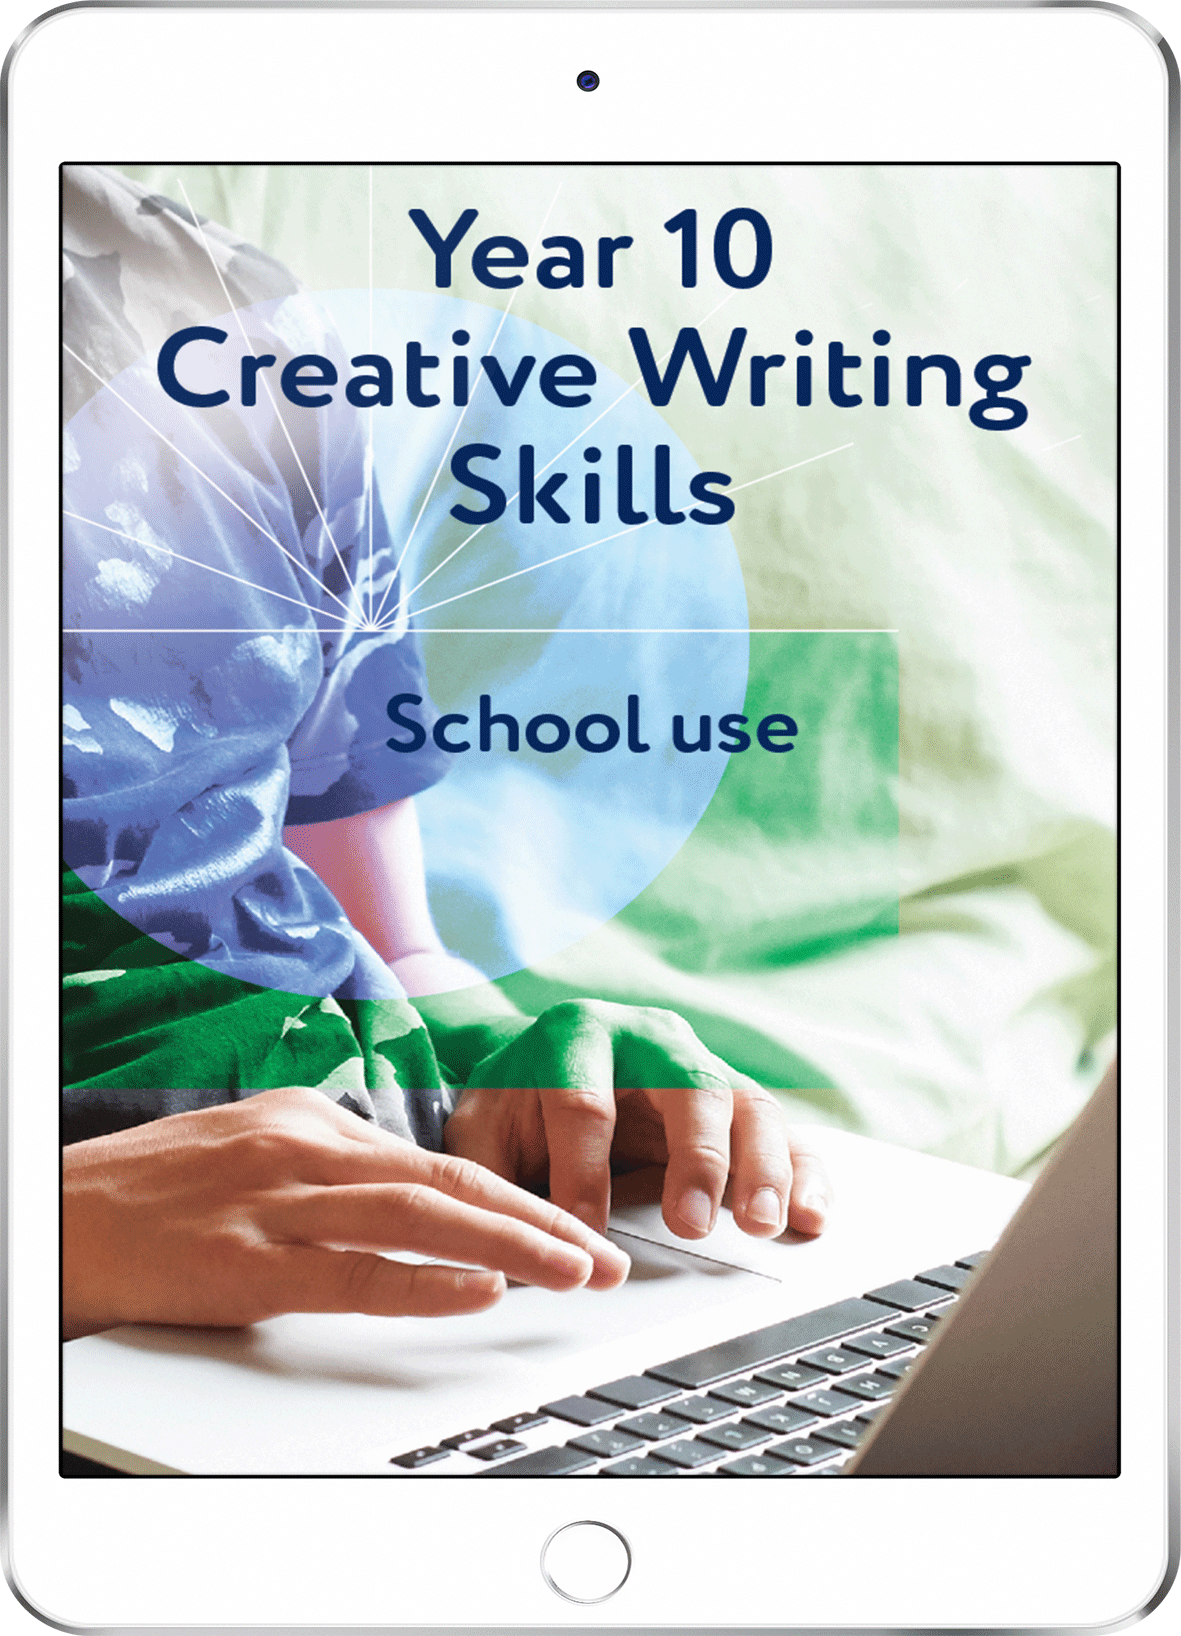 Year 10 Creative Writing Skills - School Use